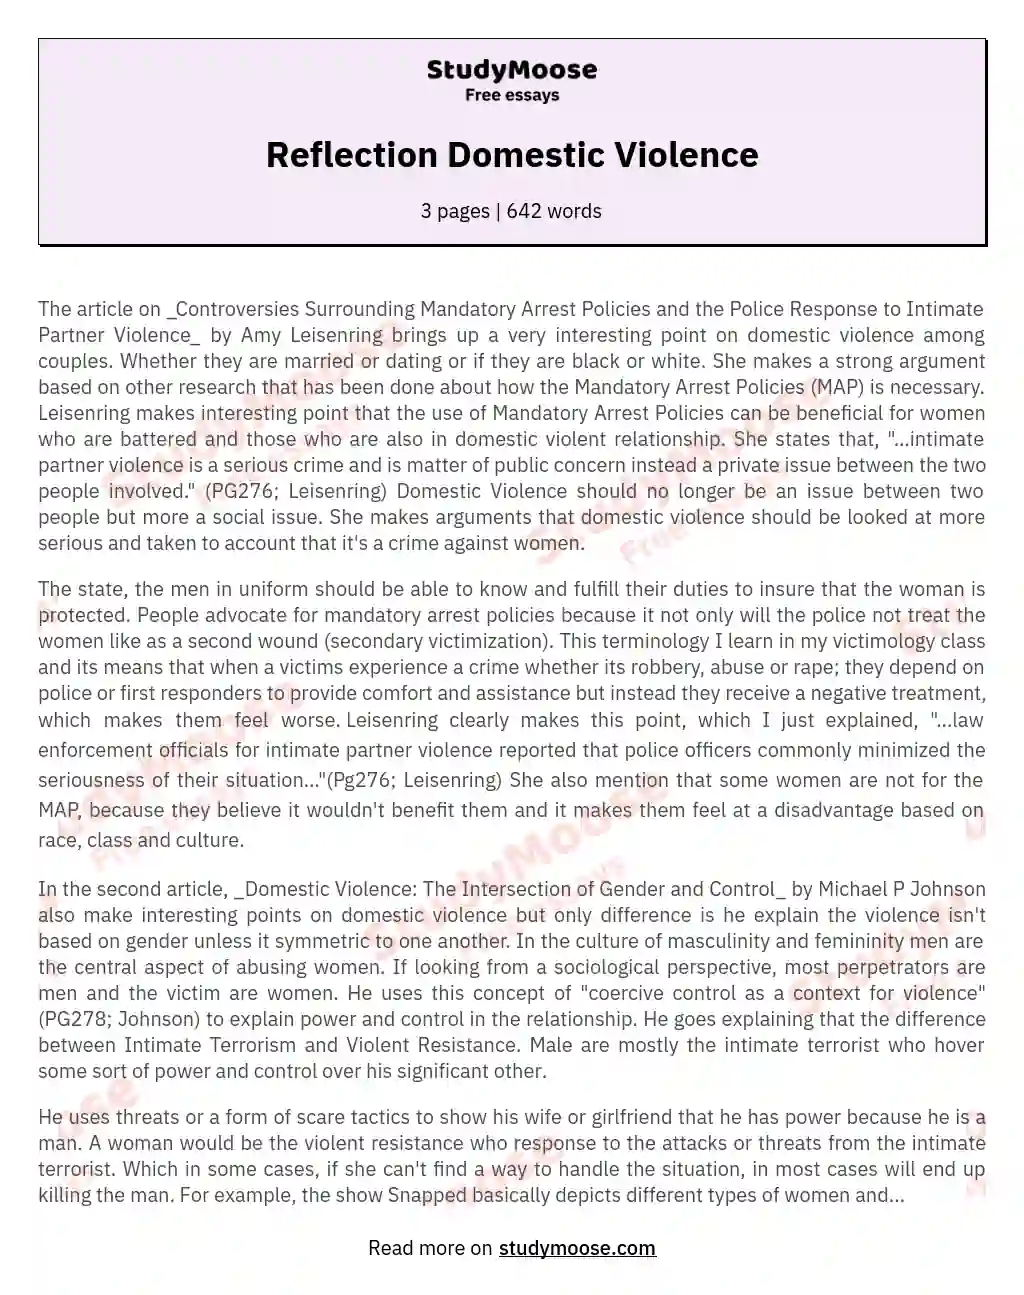 essay outline on domestic violence